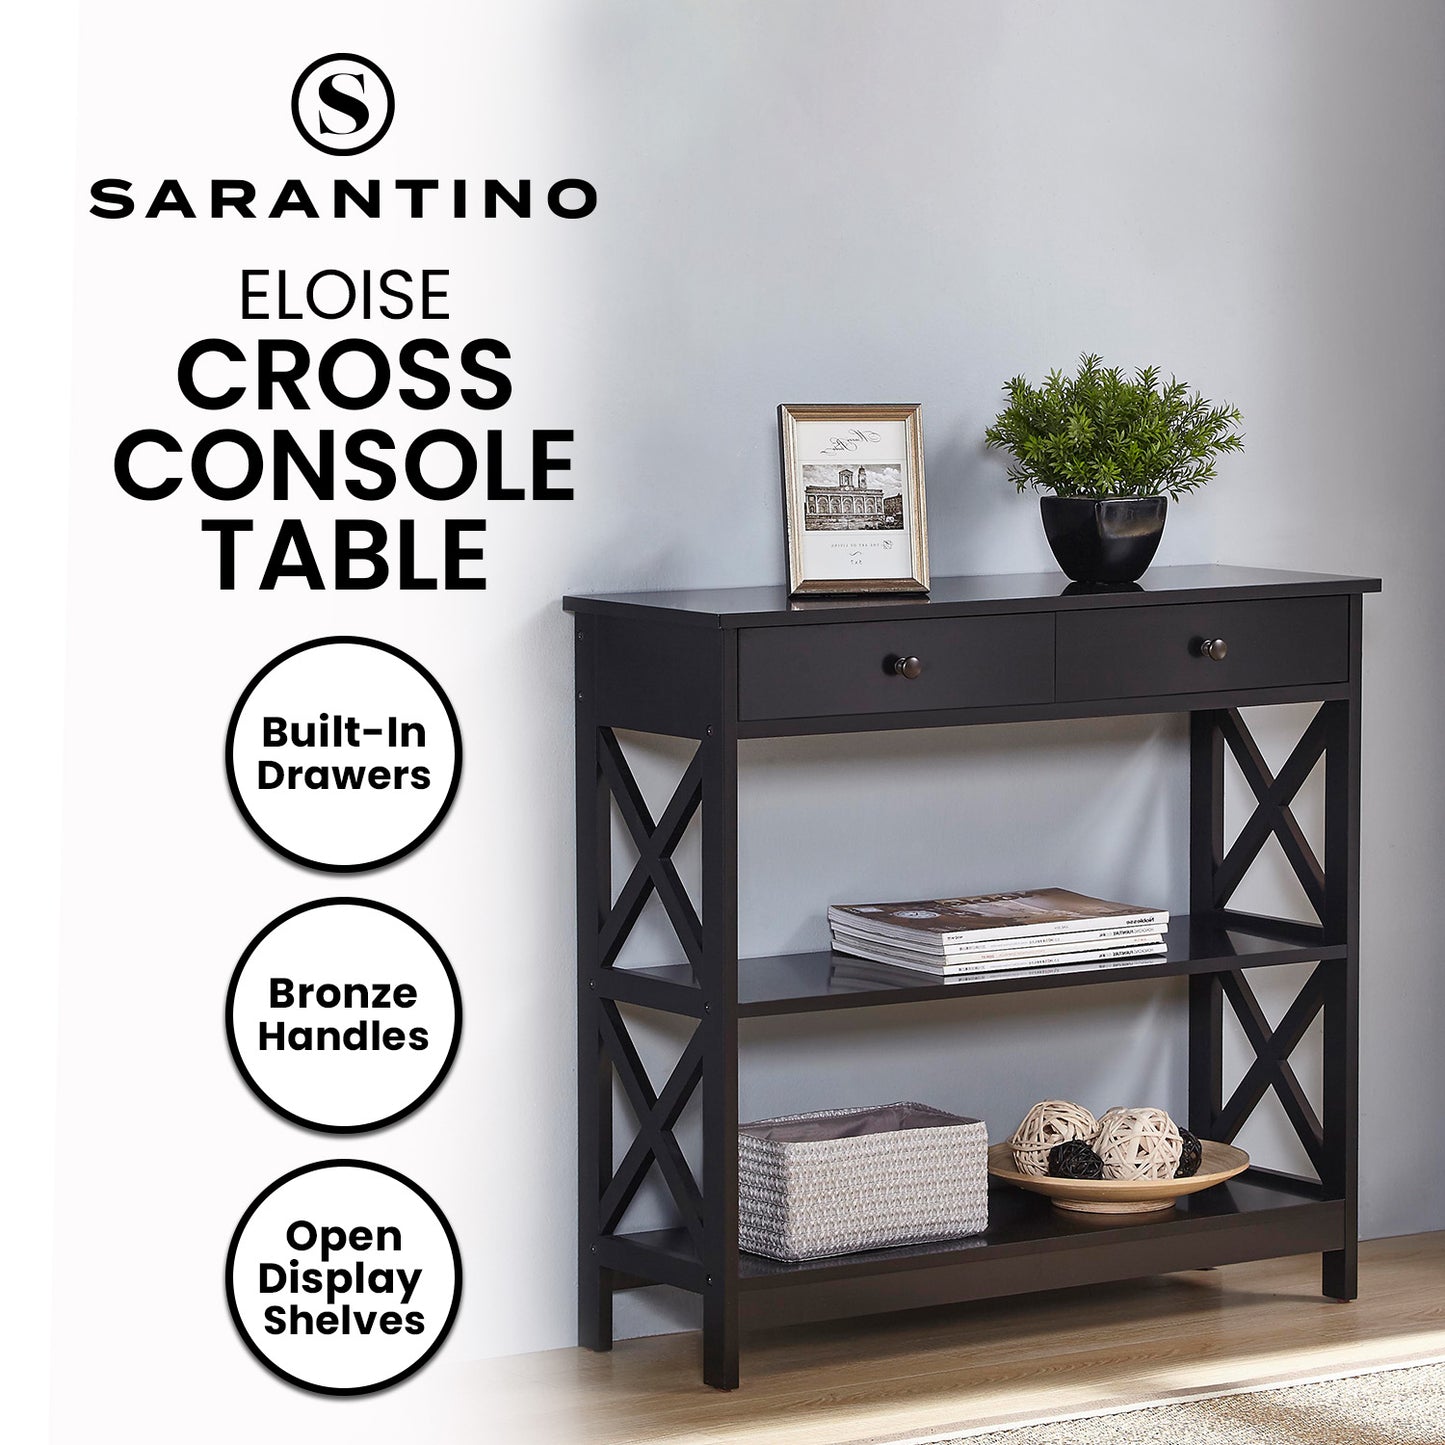 Sarantino Eloise Cross Console Table - Black